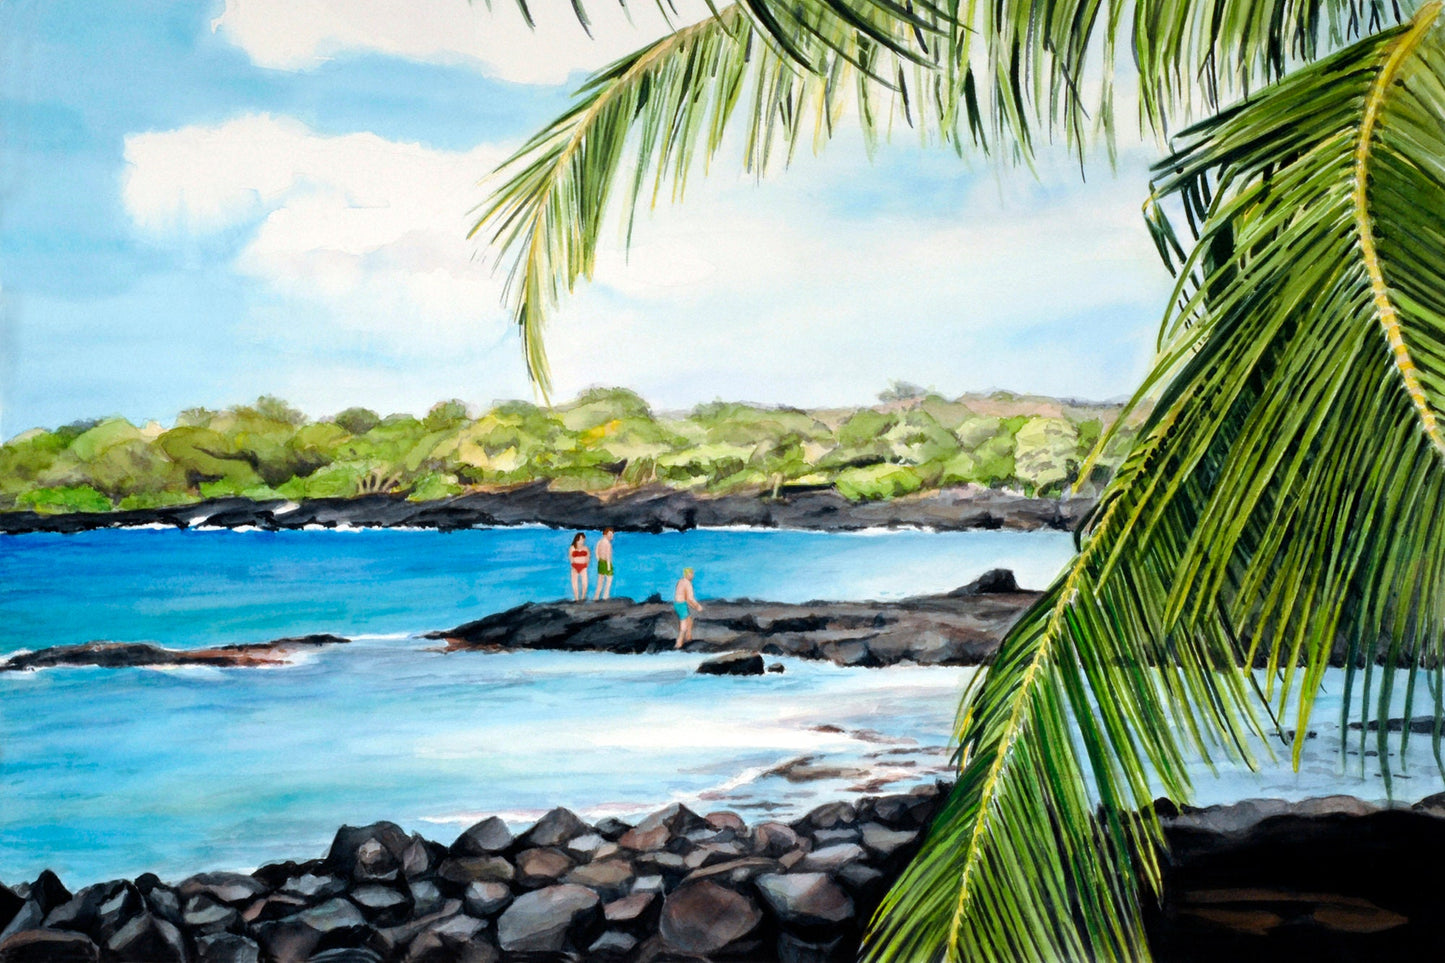 Hawaiian, Travel Poster, Large Canvas Art, Large Art Print, Coastal Art, Canvas Print